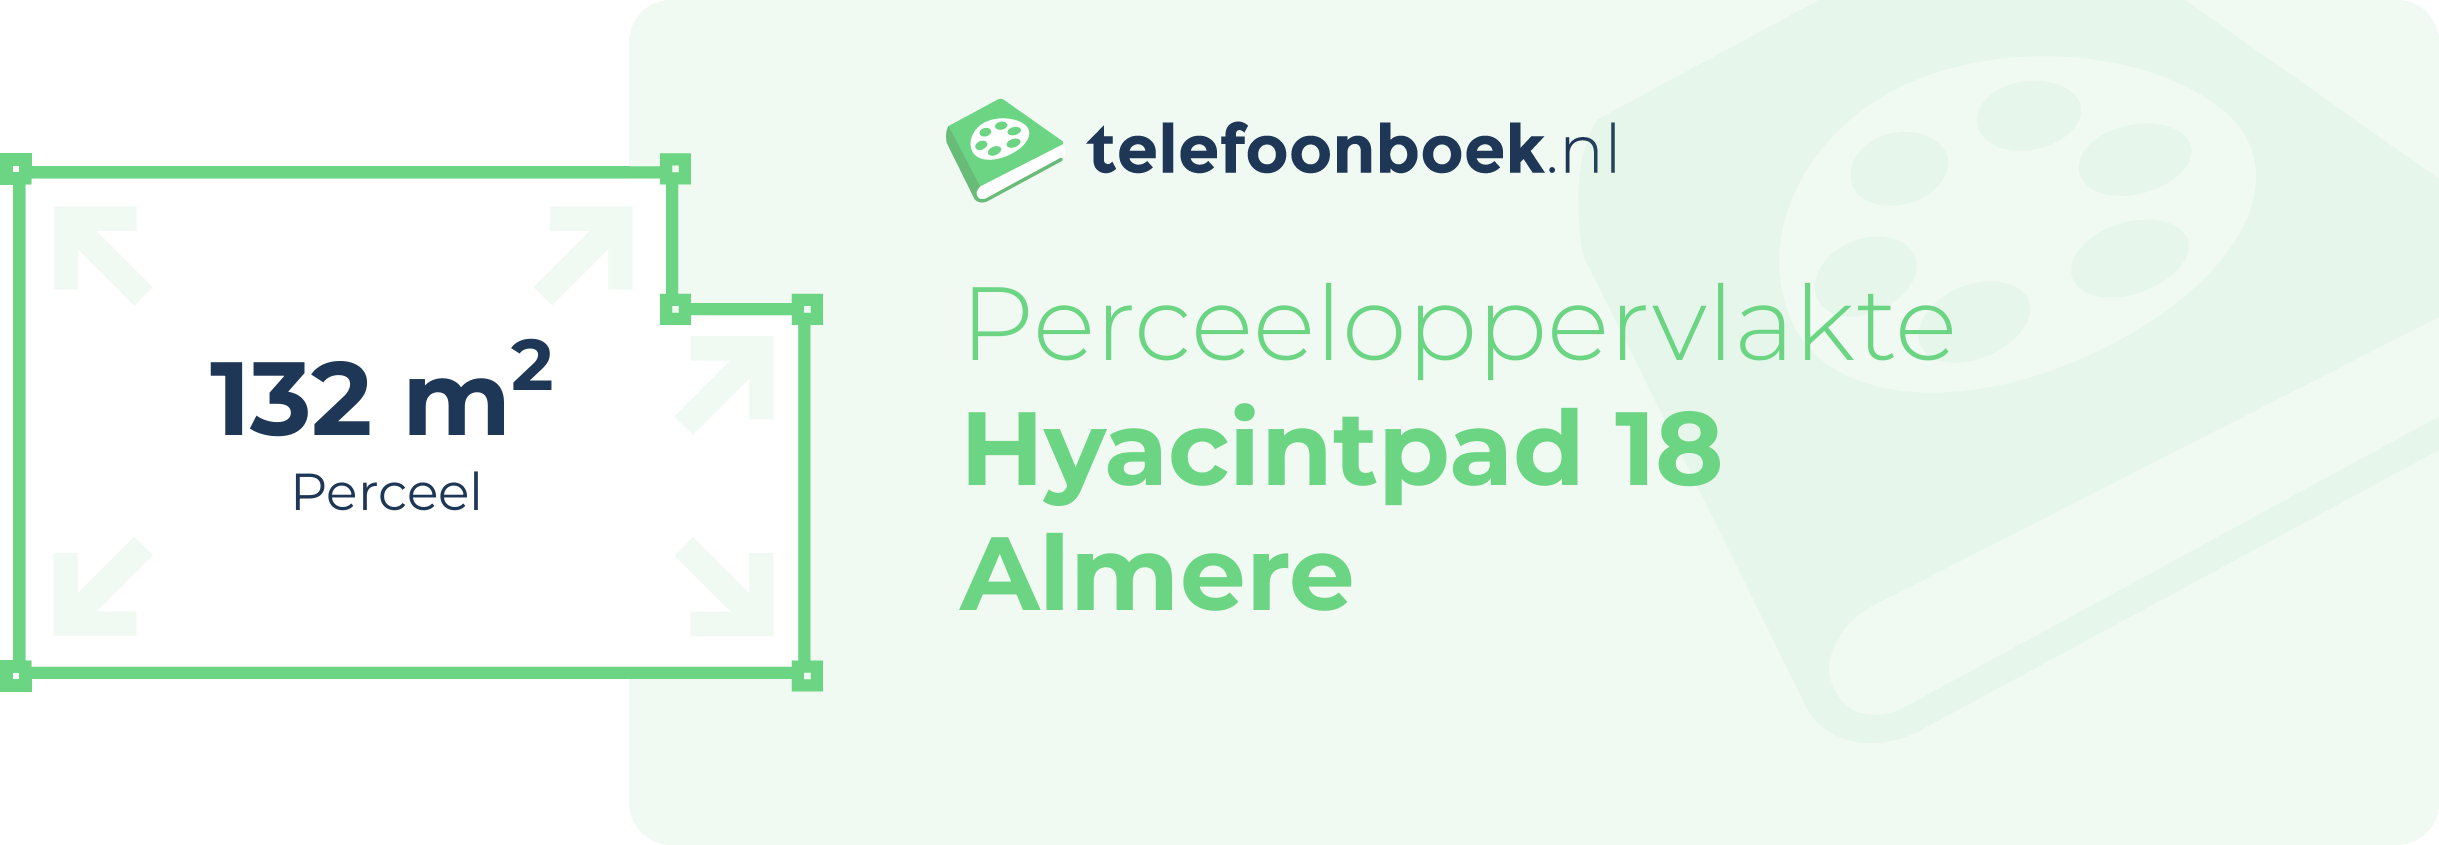 Perceeloppervlakte Hyacintpad 18 Almere